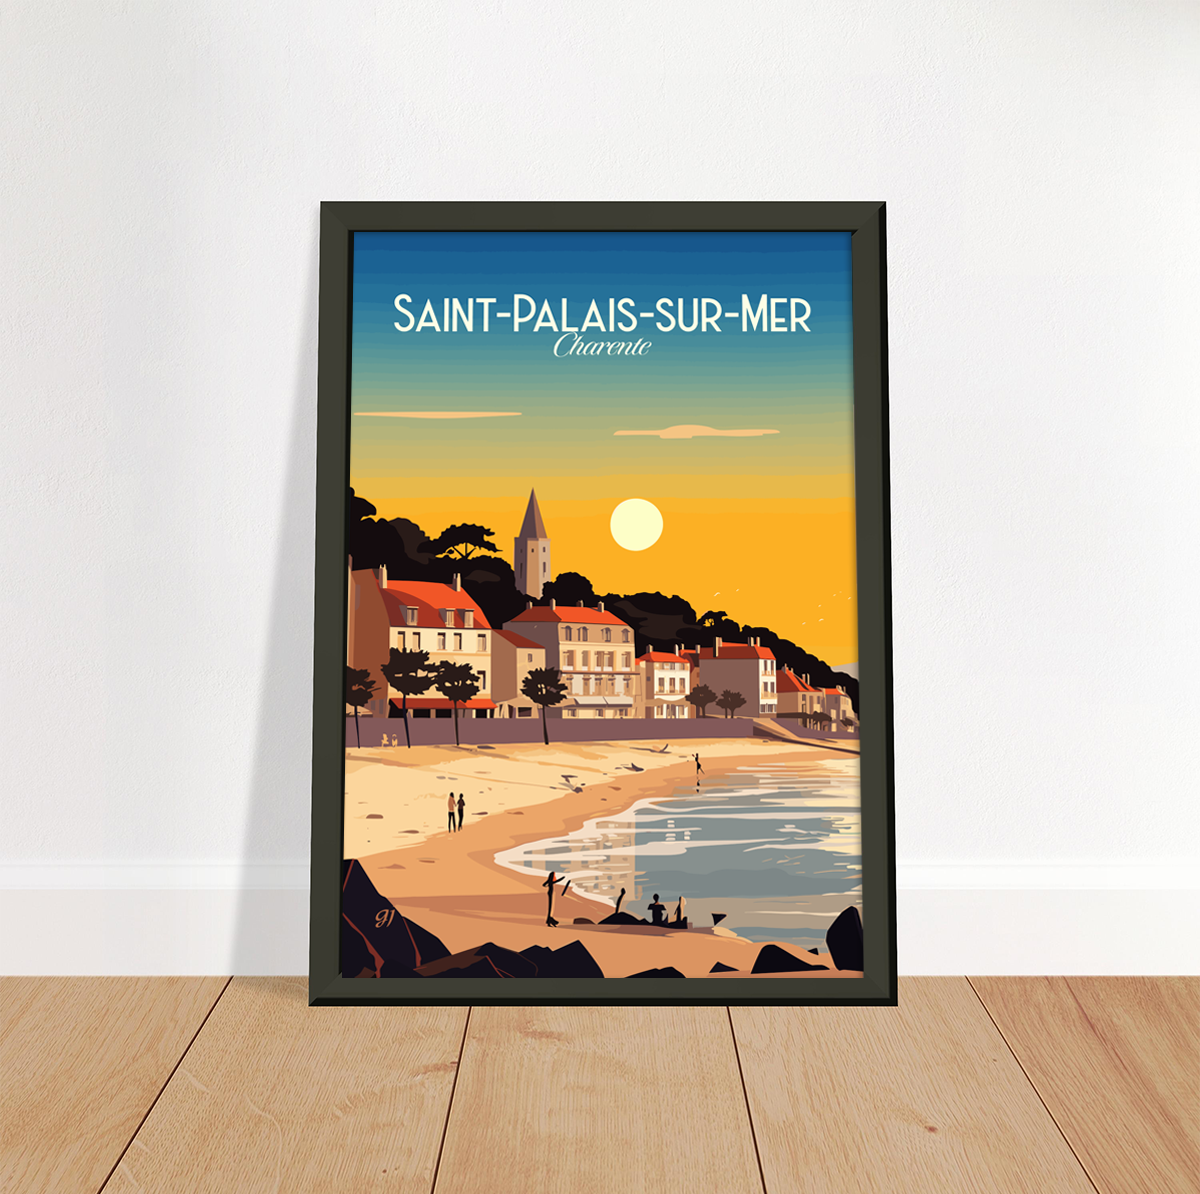 Saint-Palais-sur-Mer poster by bon voyage design